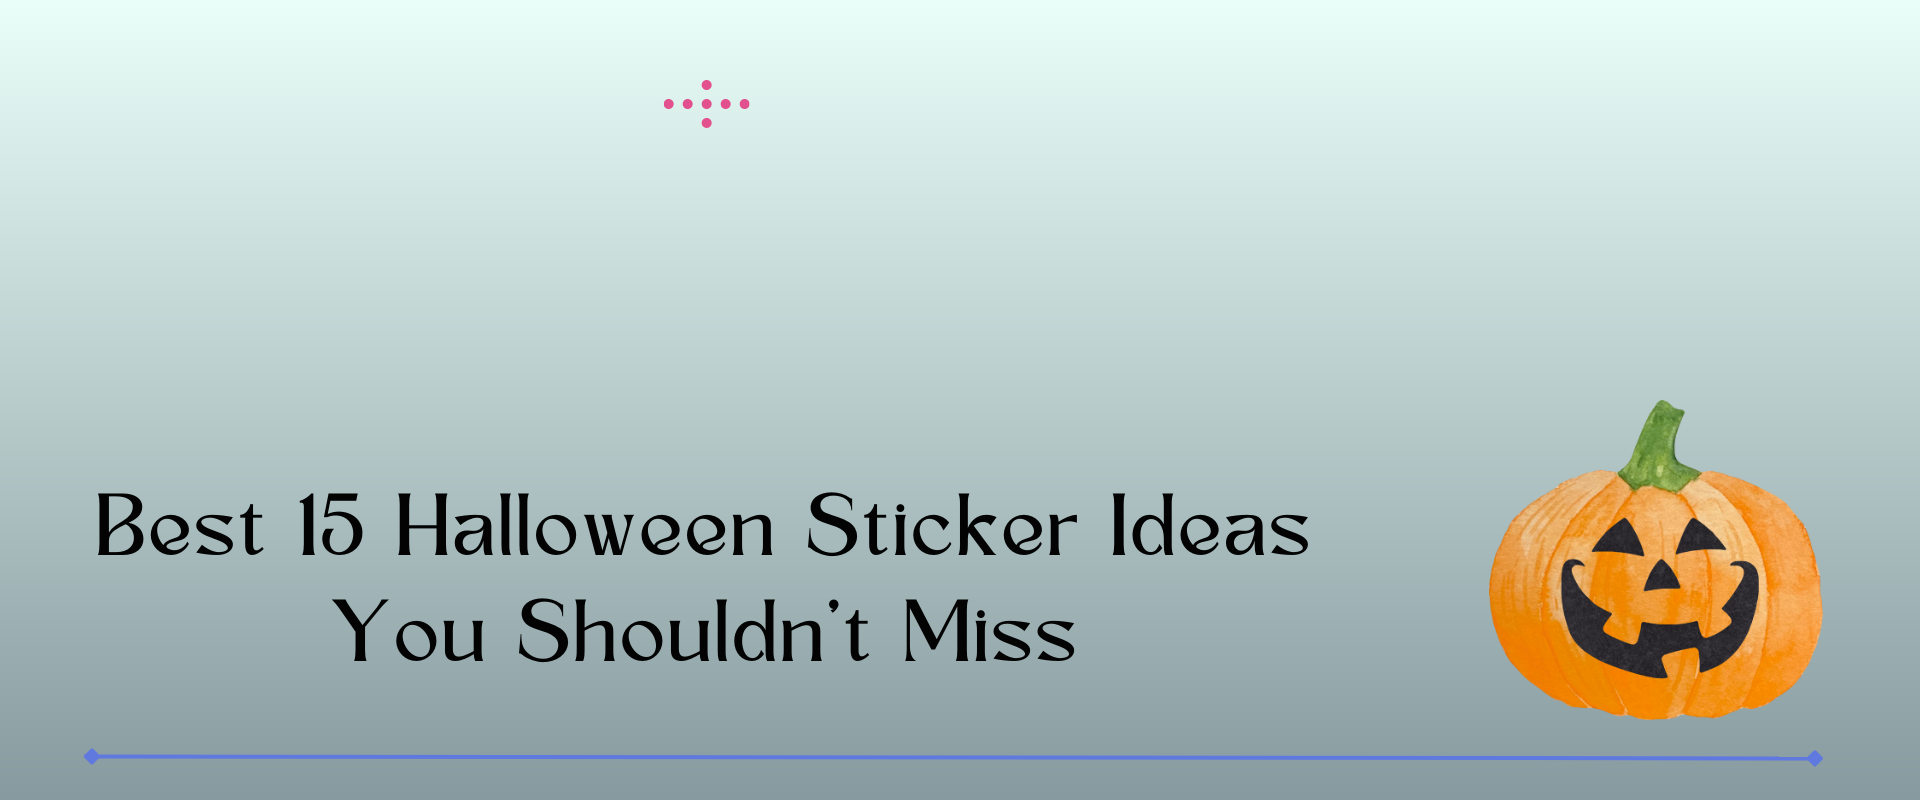 Best 15 Halloween Sticker Ideas You Shouldn’t Miss